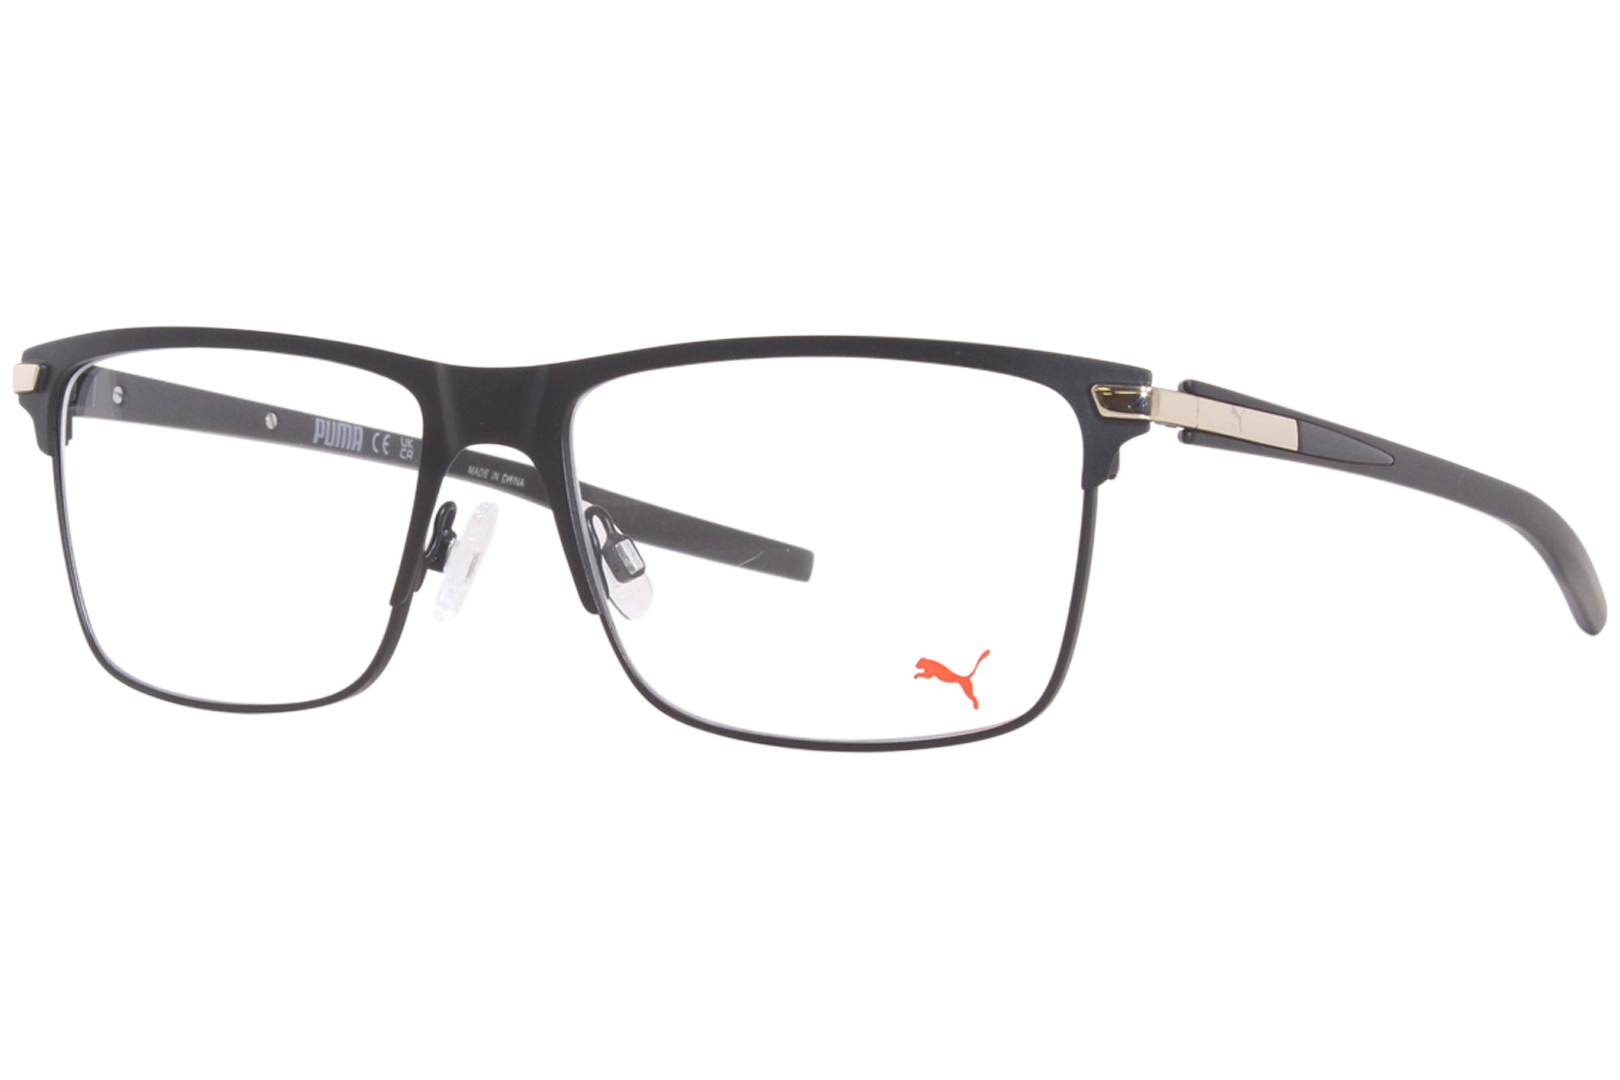 Puma 001 Eyeglasses Men's Black Full Rim Shape 58-17-145 |